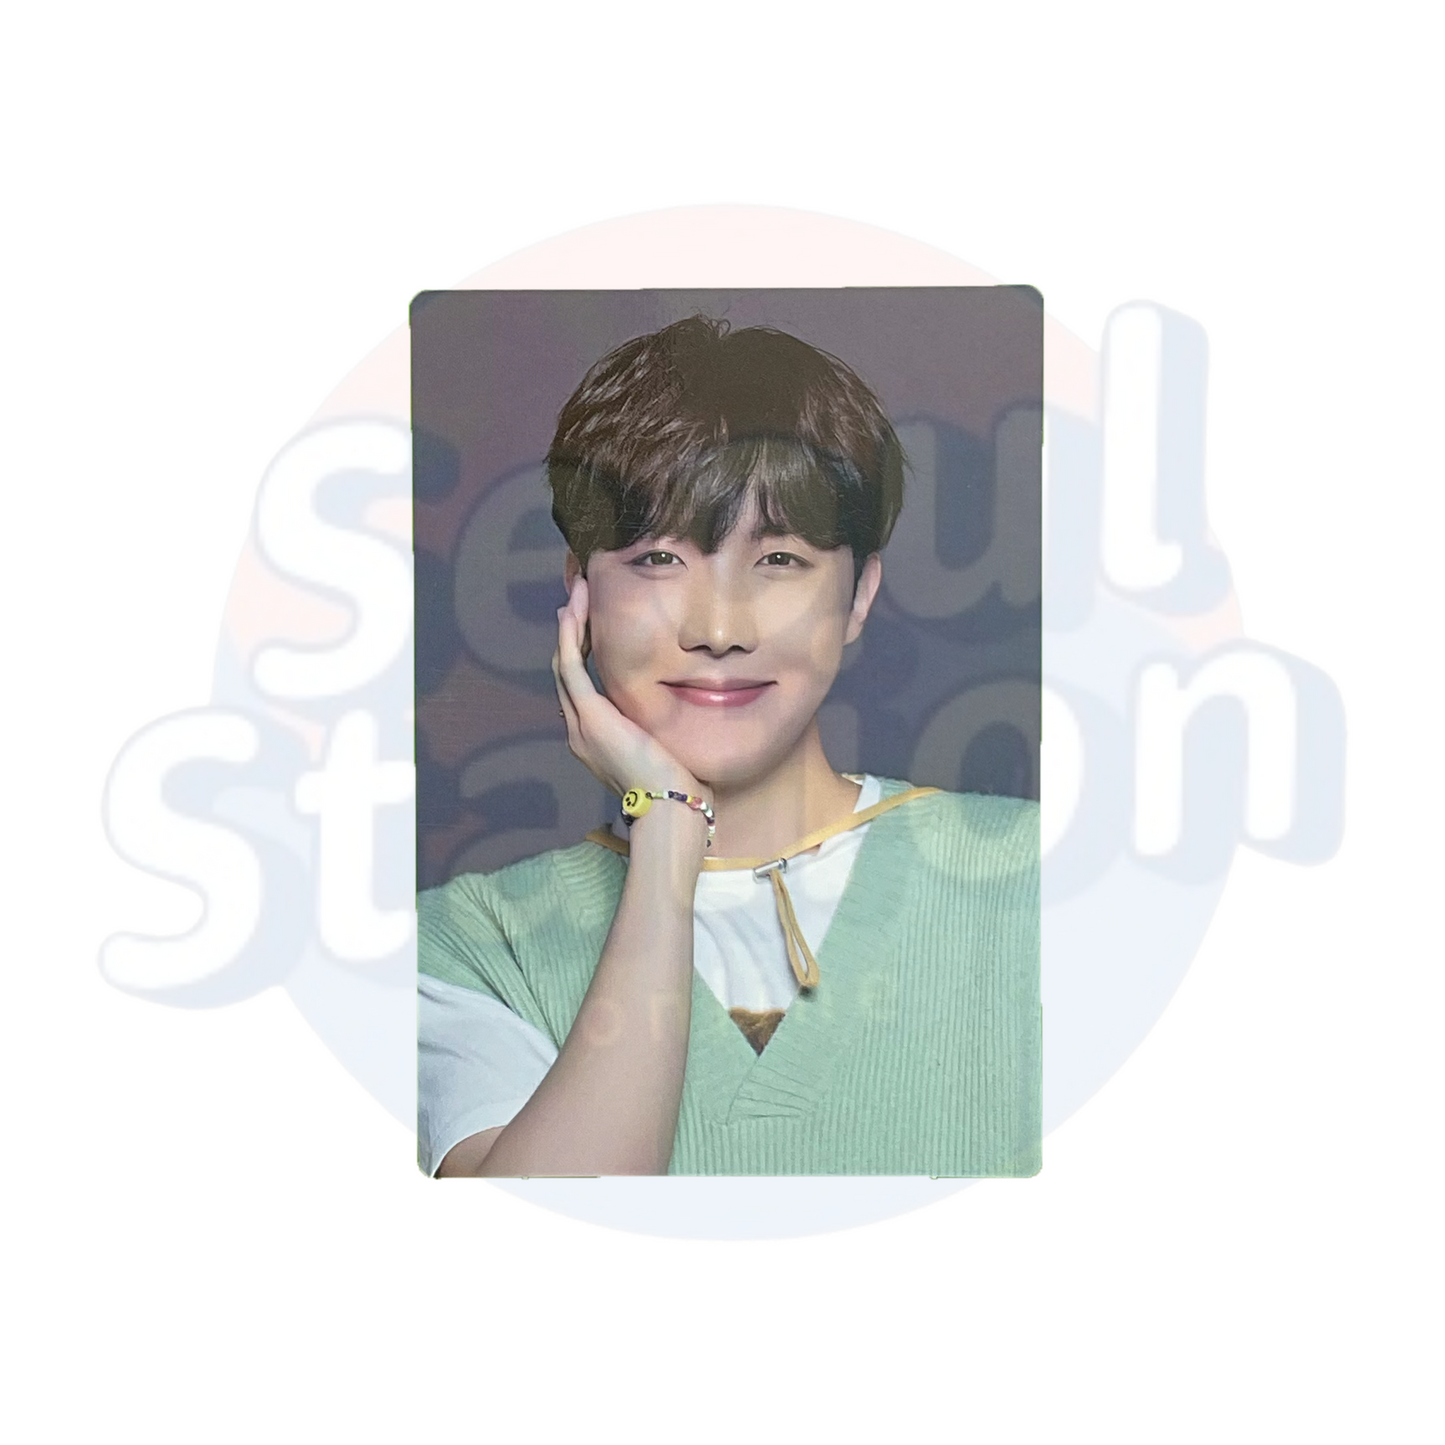 BTS - 2021 Muster SOWOOZOO - Mini Photo Card - J-Hope Version 6/8